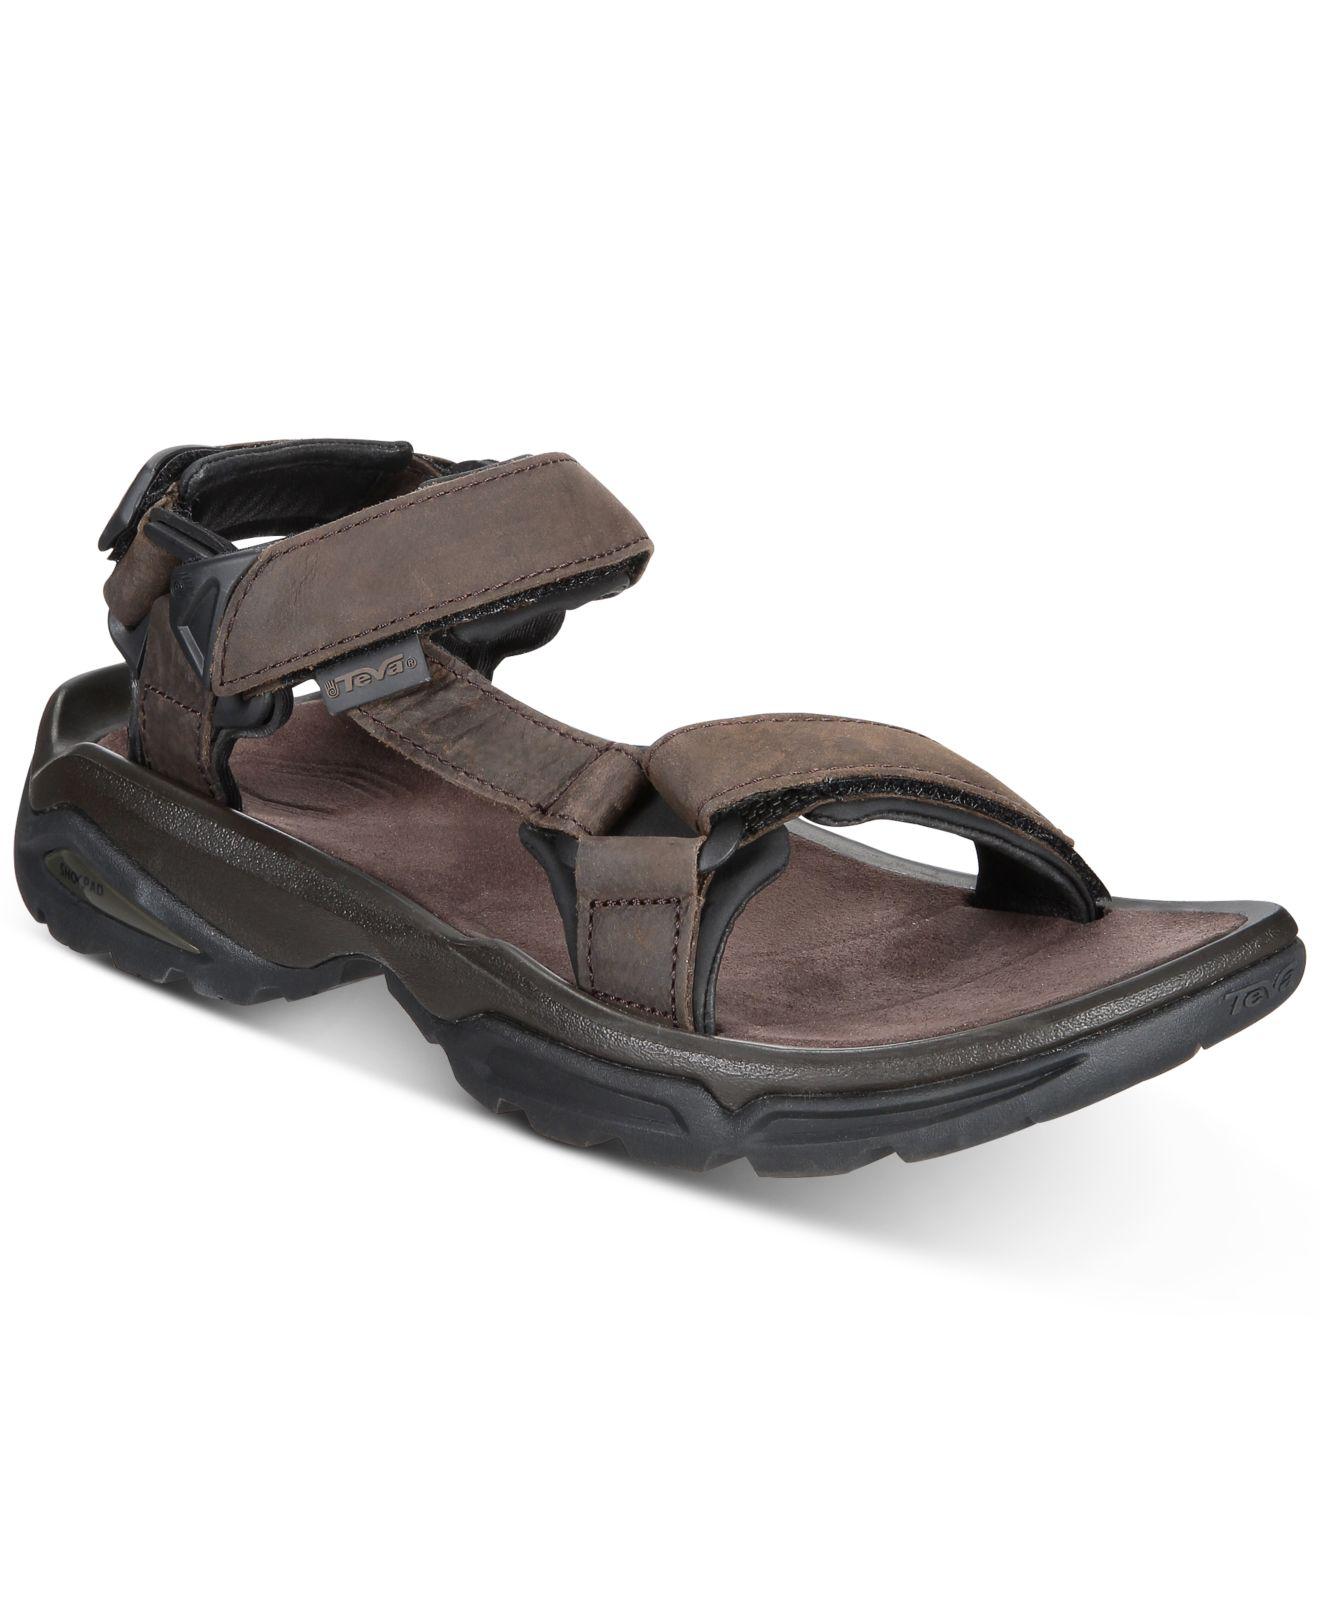 Teva Terra Fi 4 Water-resistant Leather Sandals in Brown for Men - Lyst